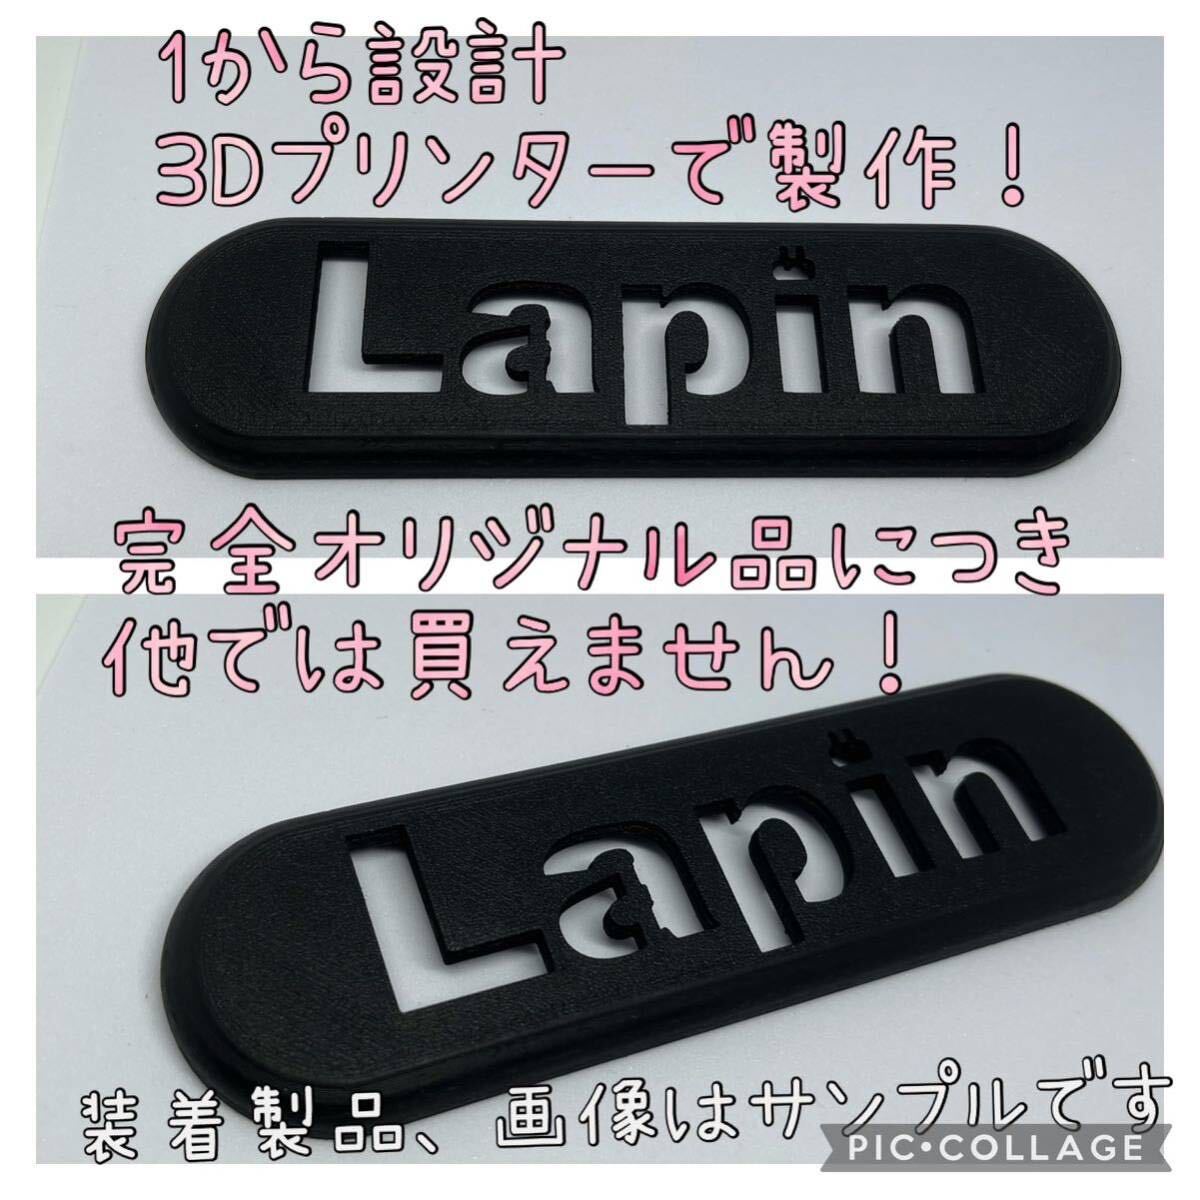 HE33Sラパン/ラパンLC専用lapinハイマウントストップランプカバー文字ver.2 lapin hidden rabbit B6